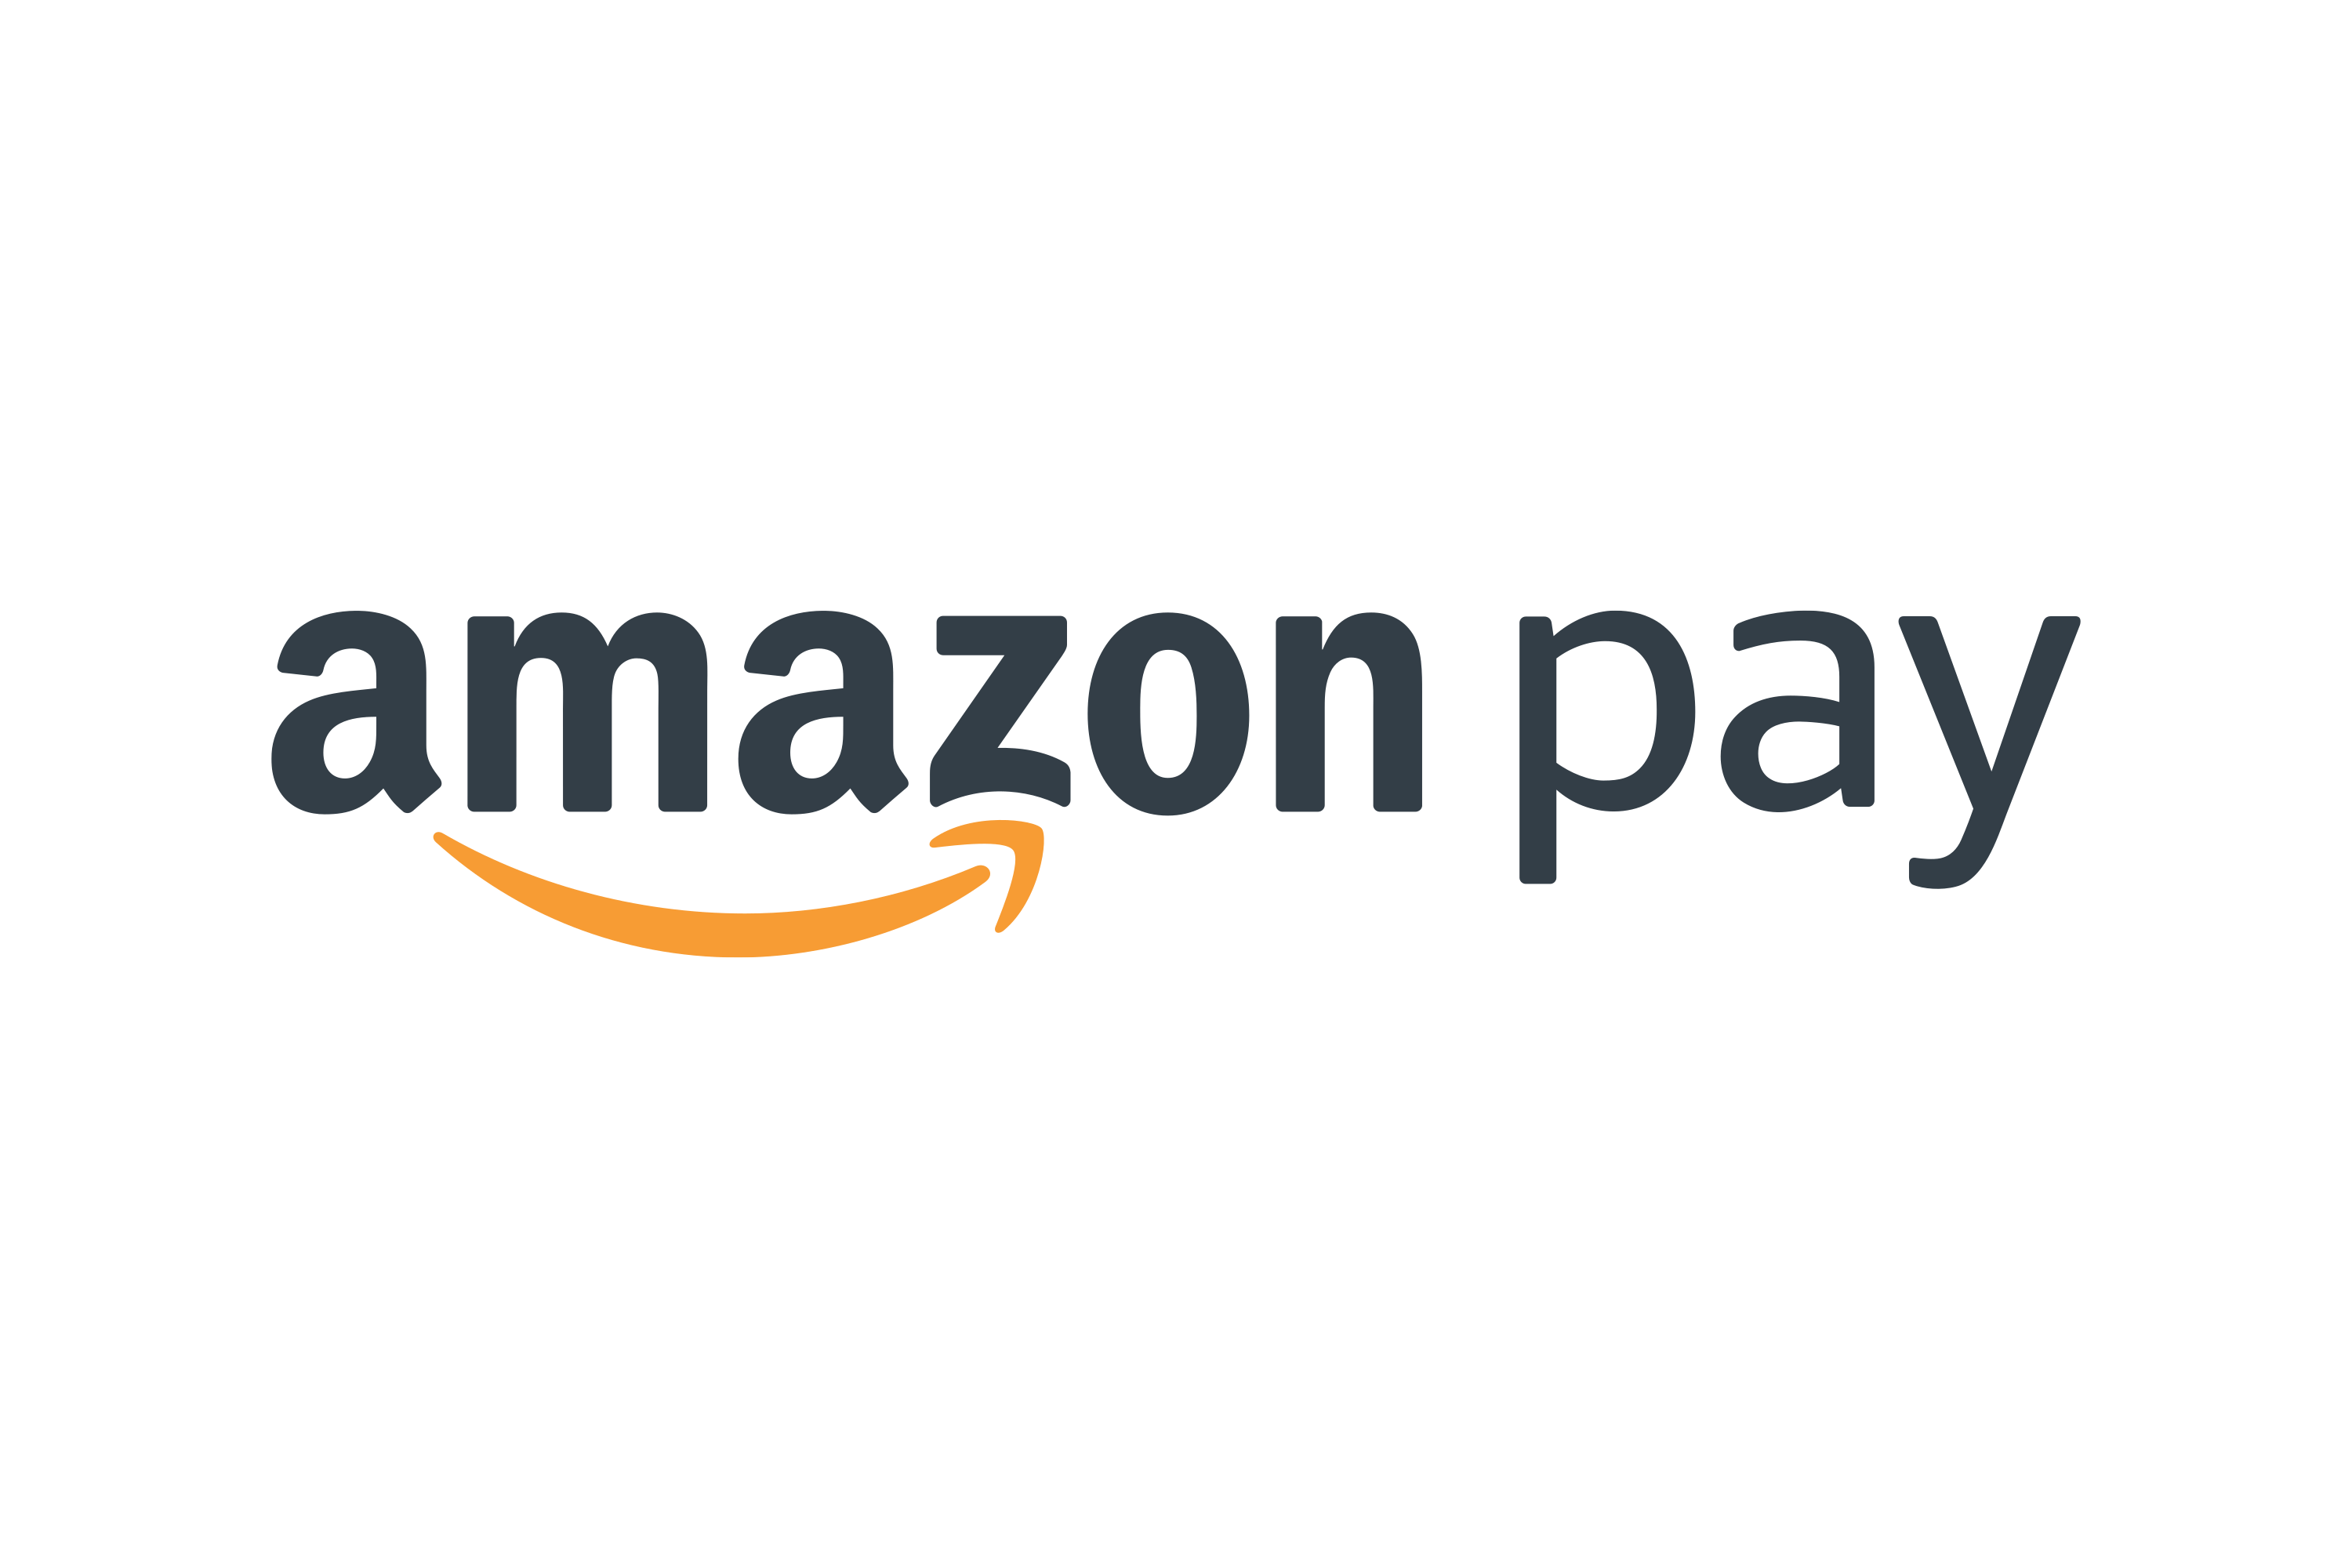 collana pay / AmazonPay